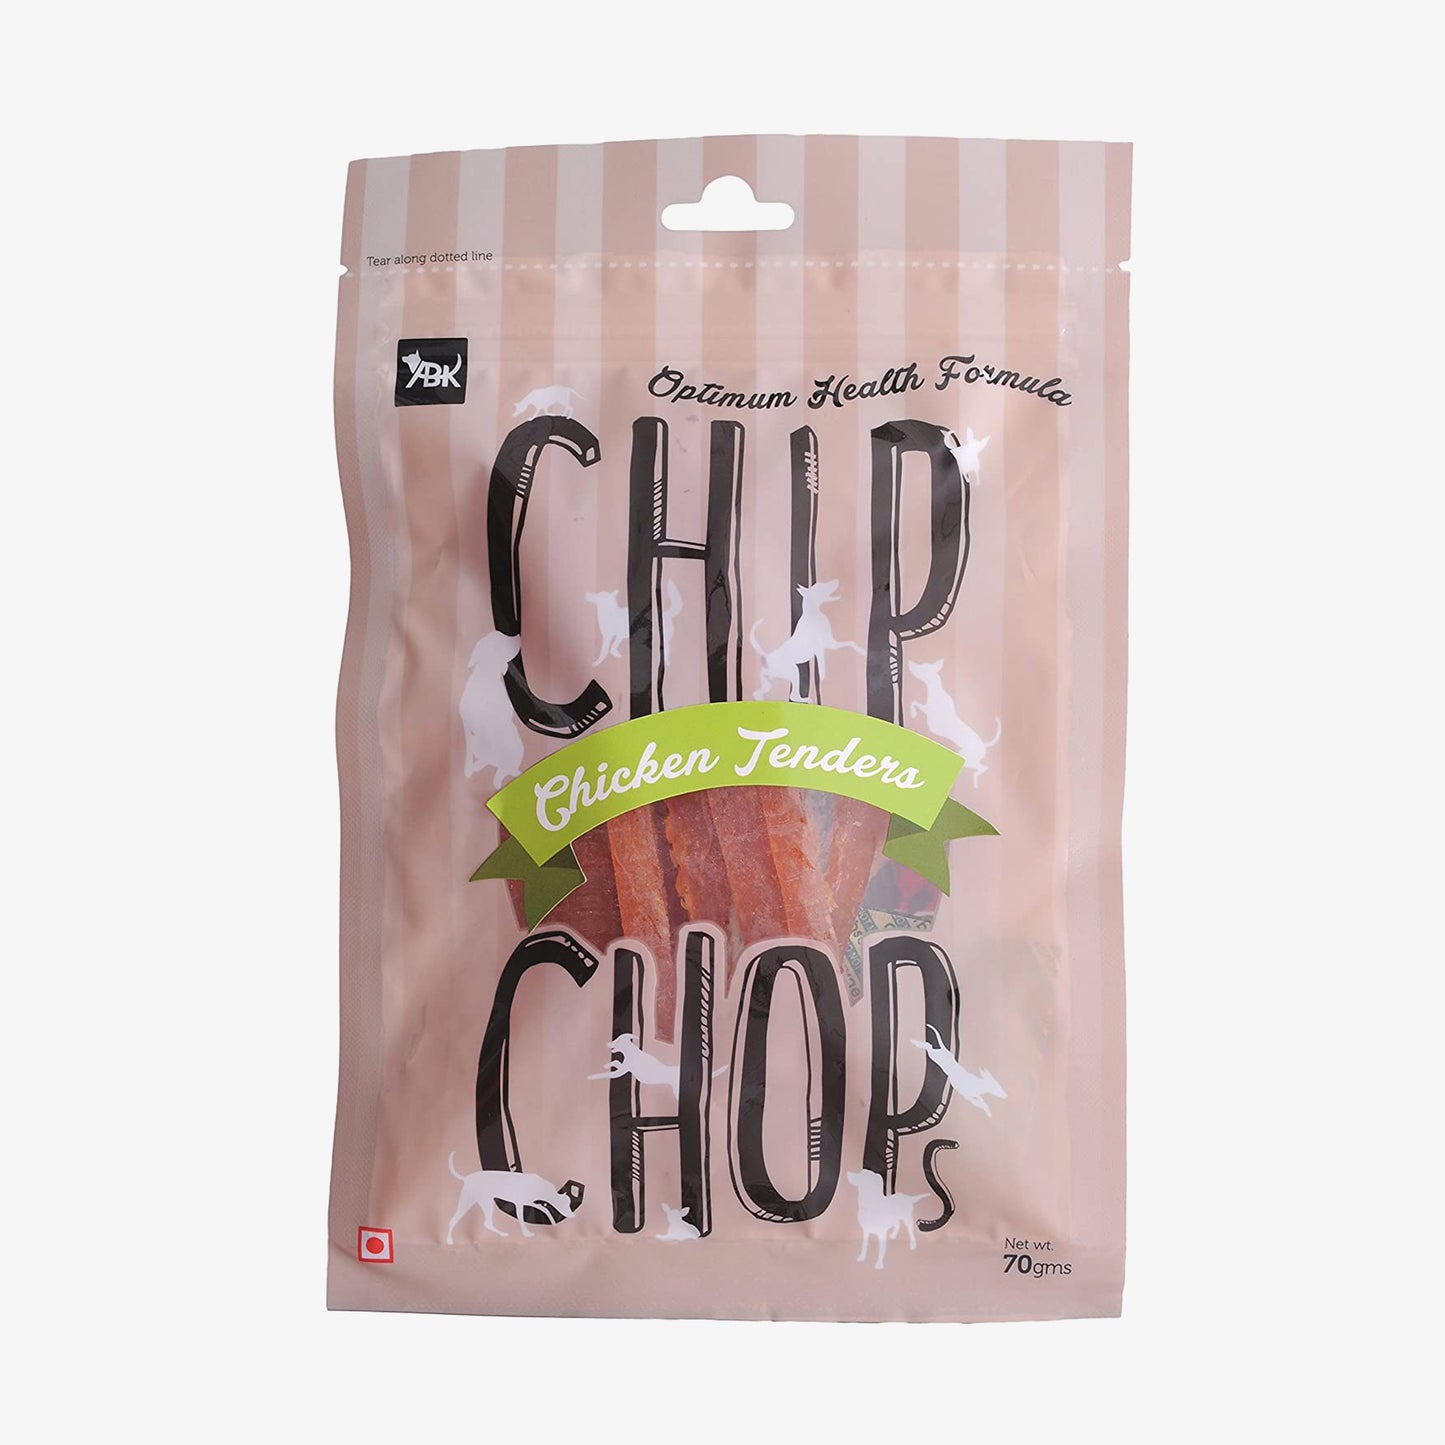 Chip Chops Chicken Tenders